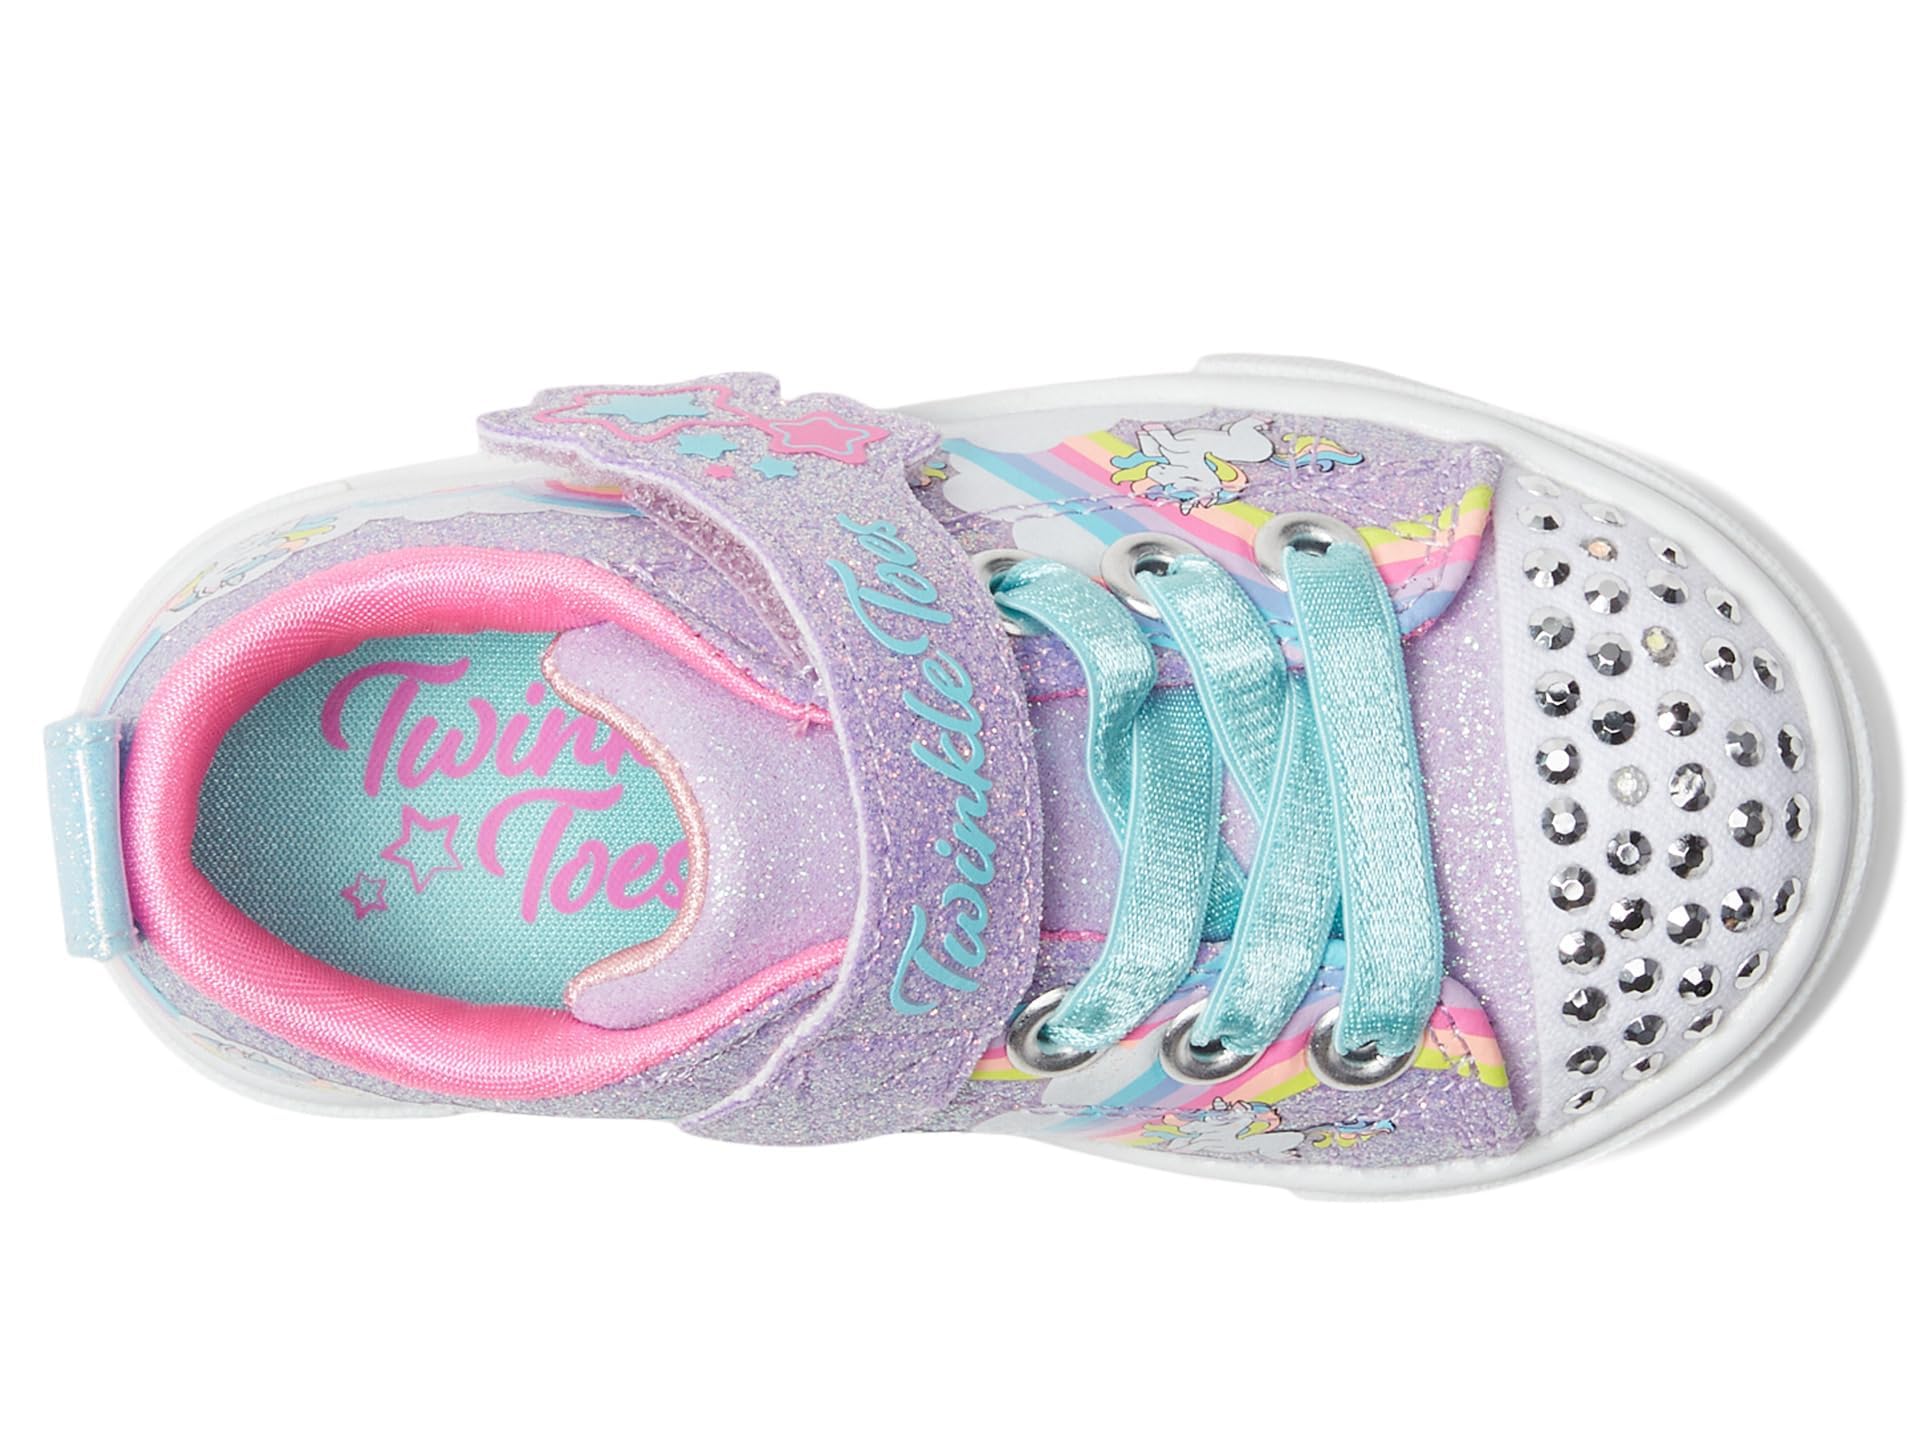 Skechers Girl's Toes Twinkle Sparks-Stormy Bright Sneaker